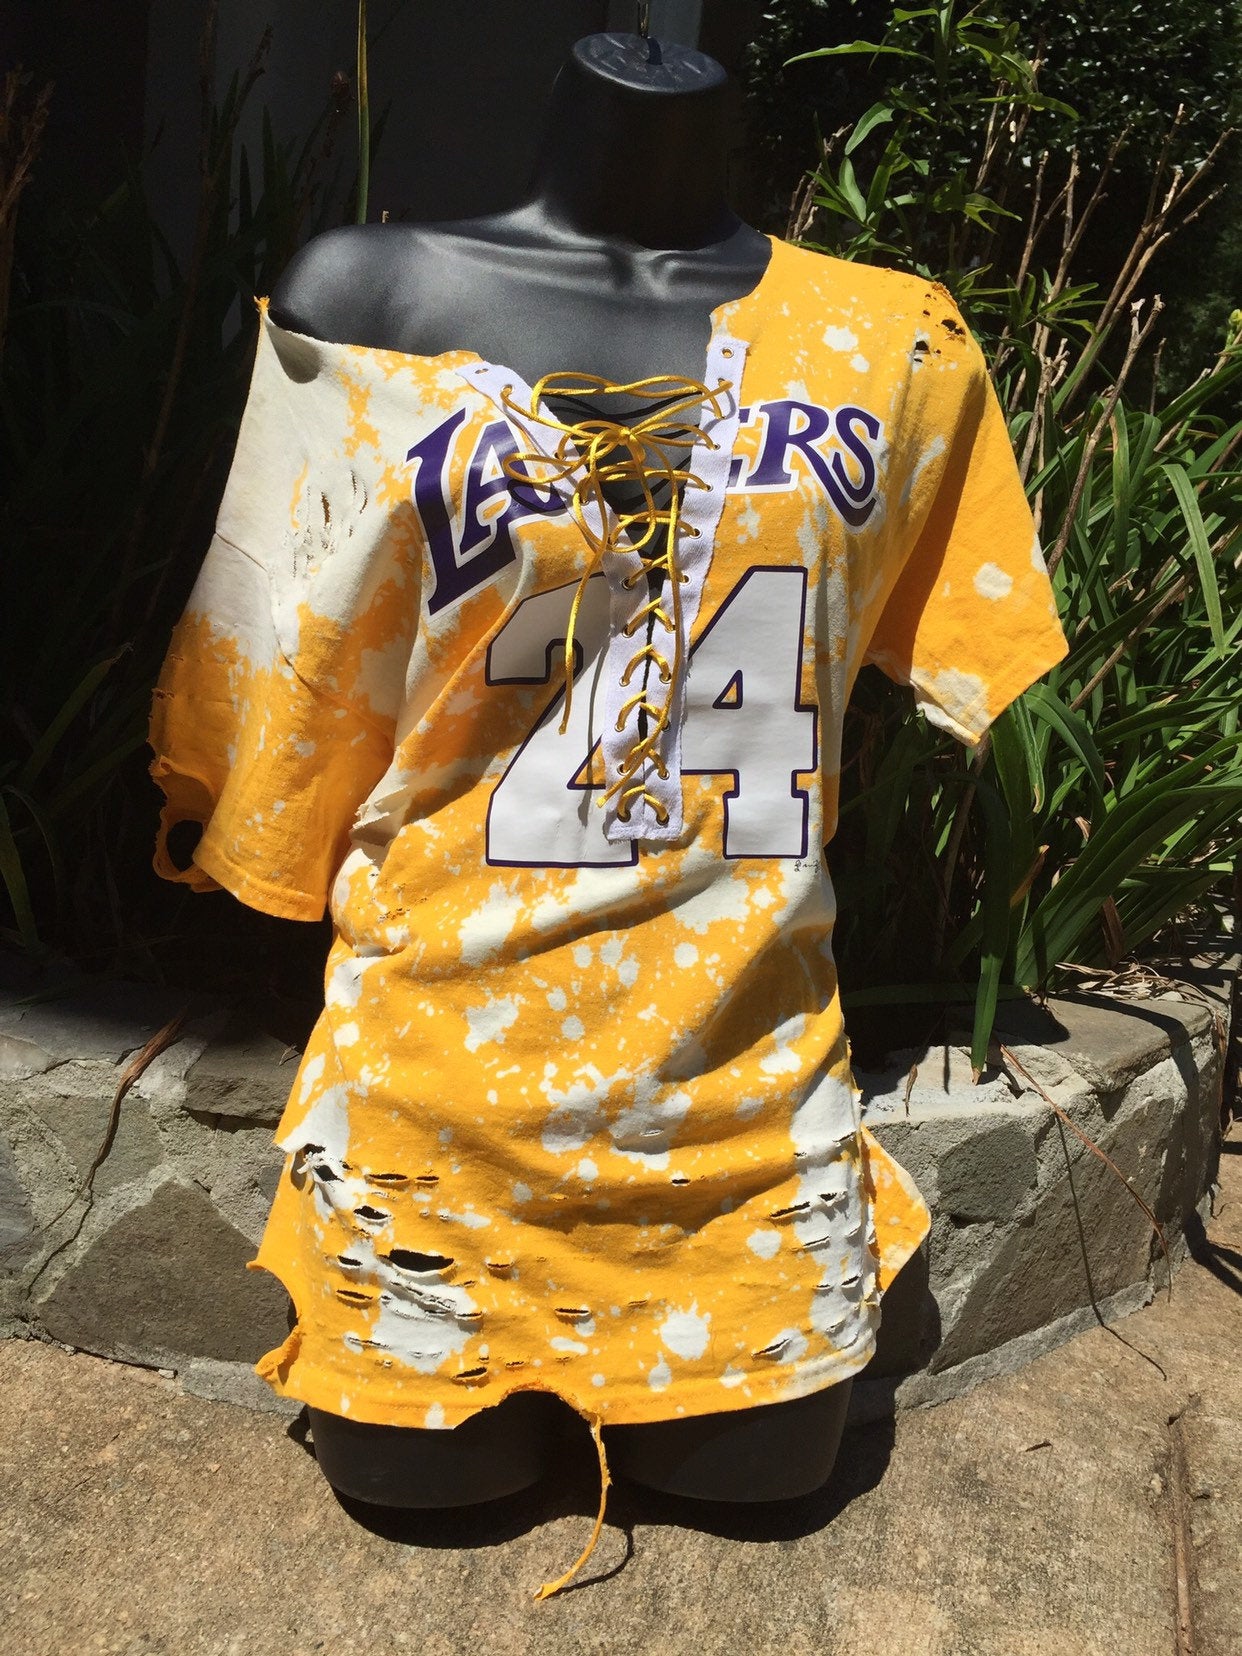 Lakers 24 T-Shirt